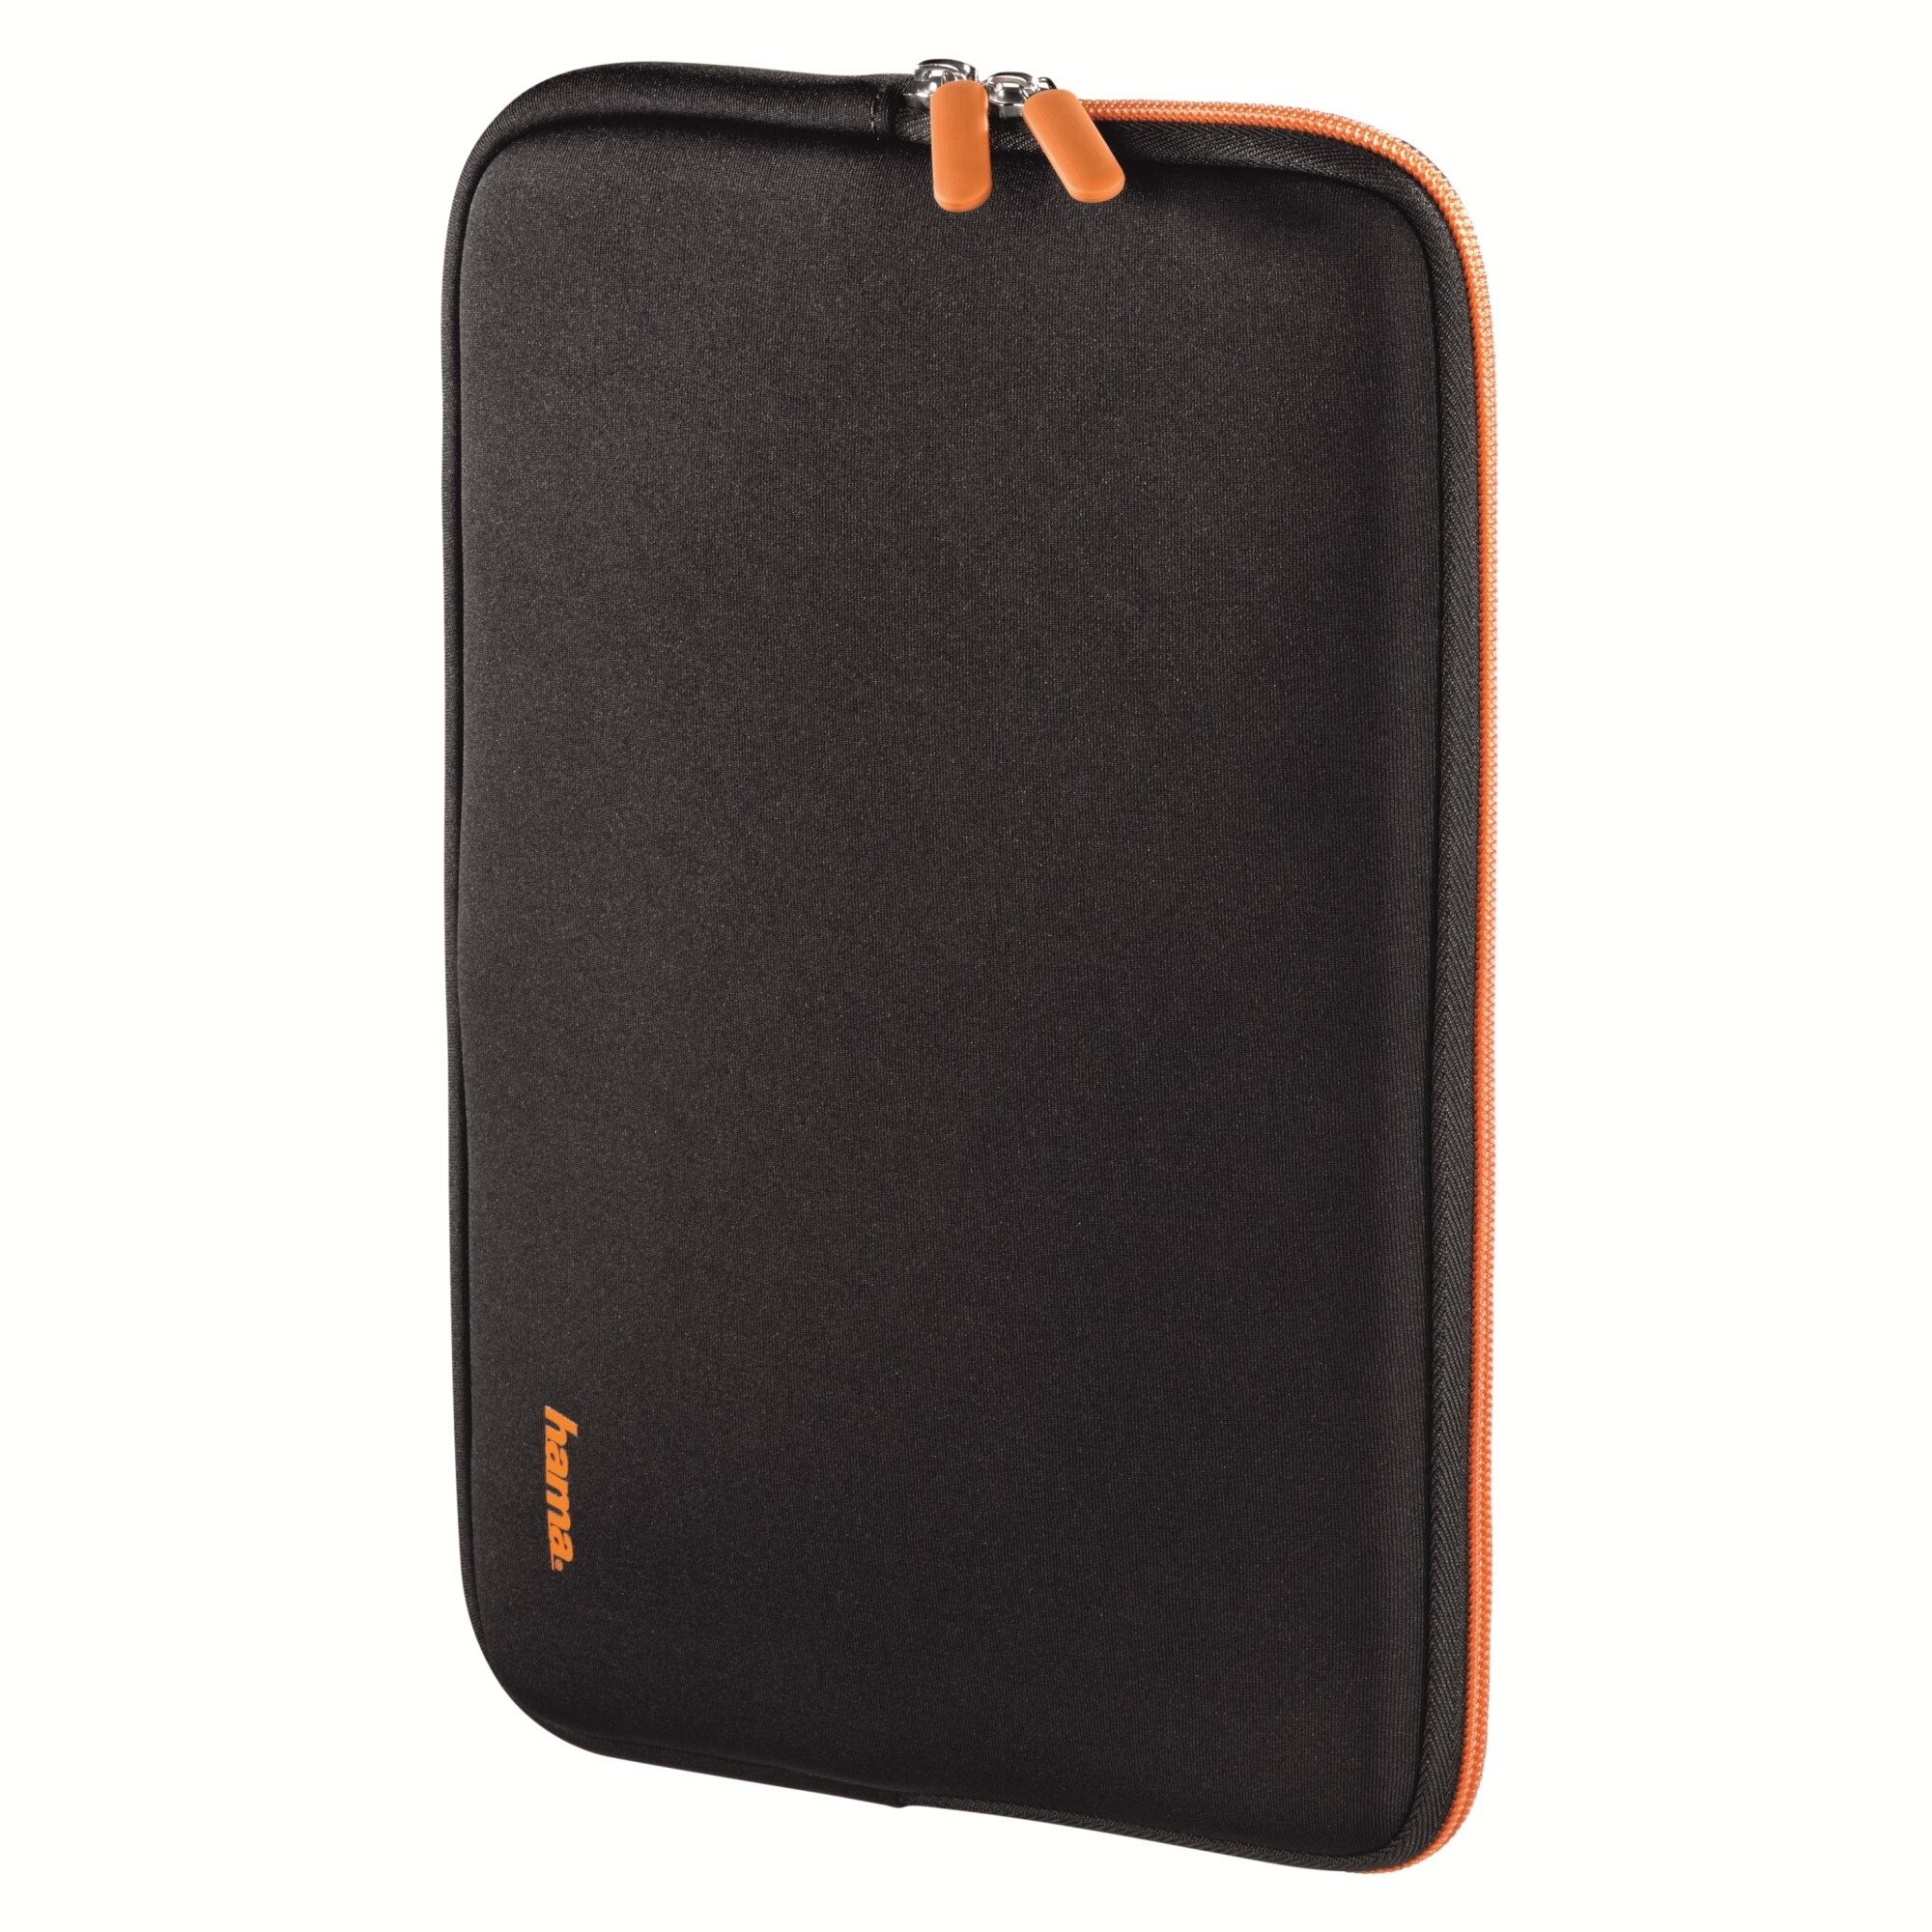 Husa Sleeve Tab-Innovation Hama pentru tablete de 7", Black / Orange